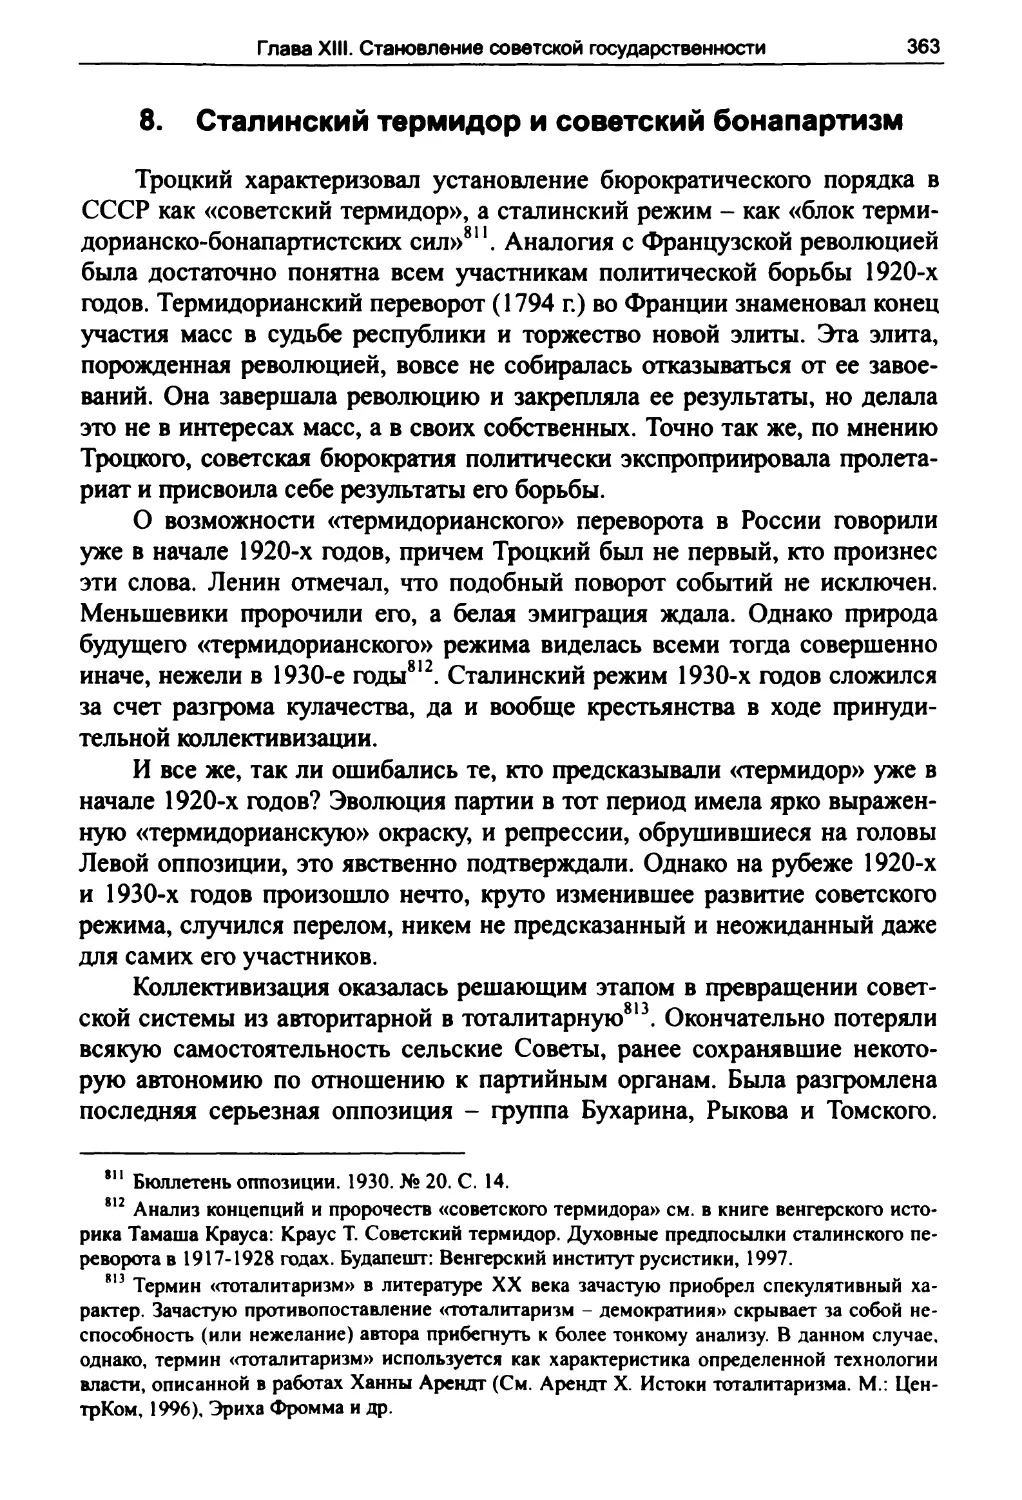 8. Сталинский термидор и советский бонапартизм